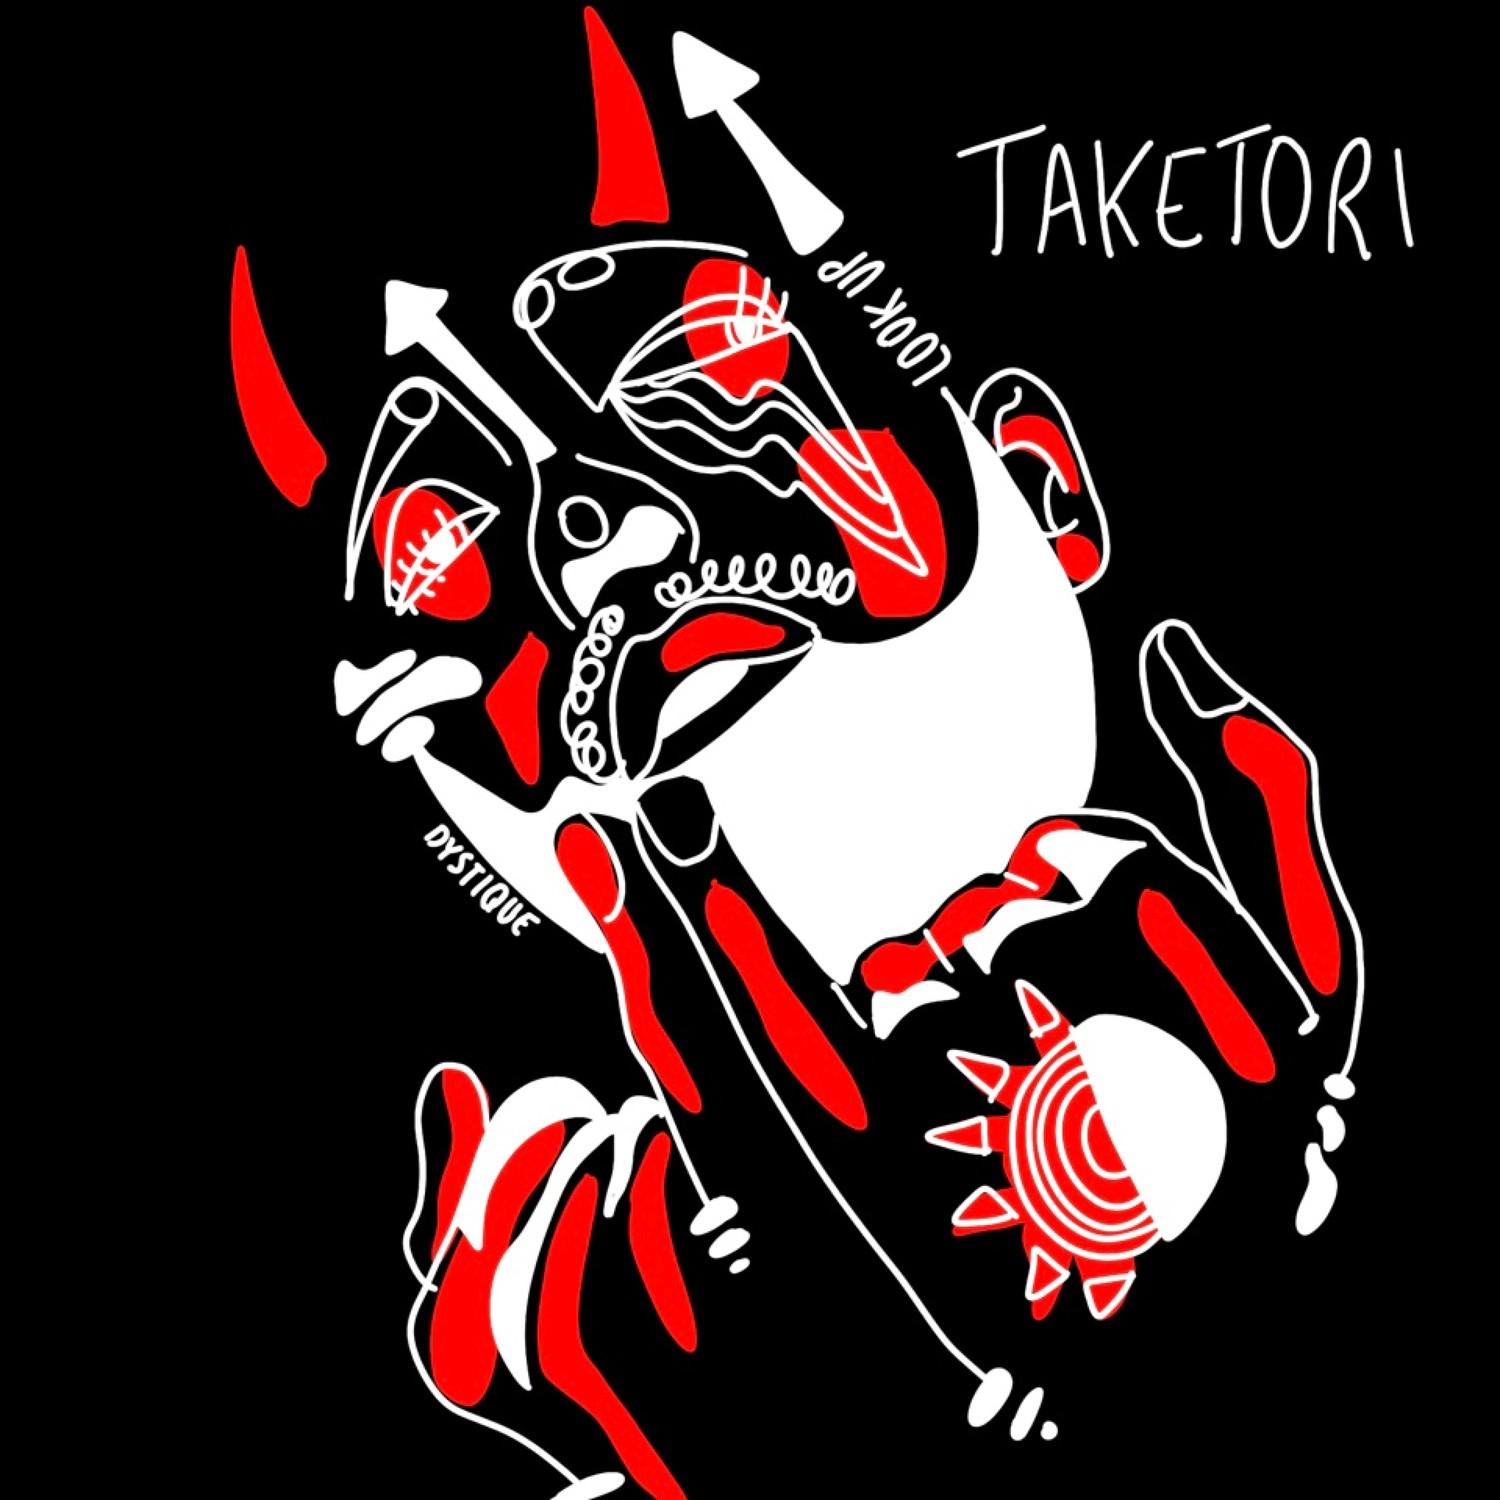 Taketori